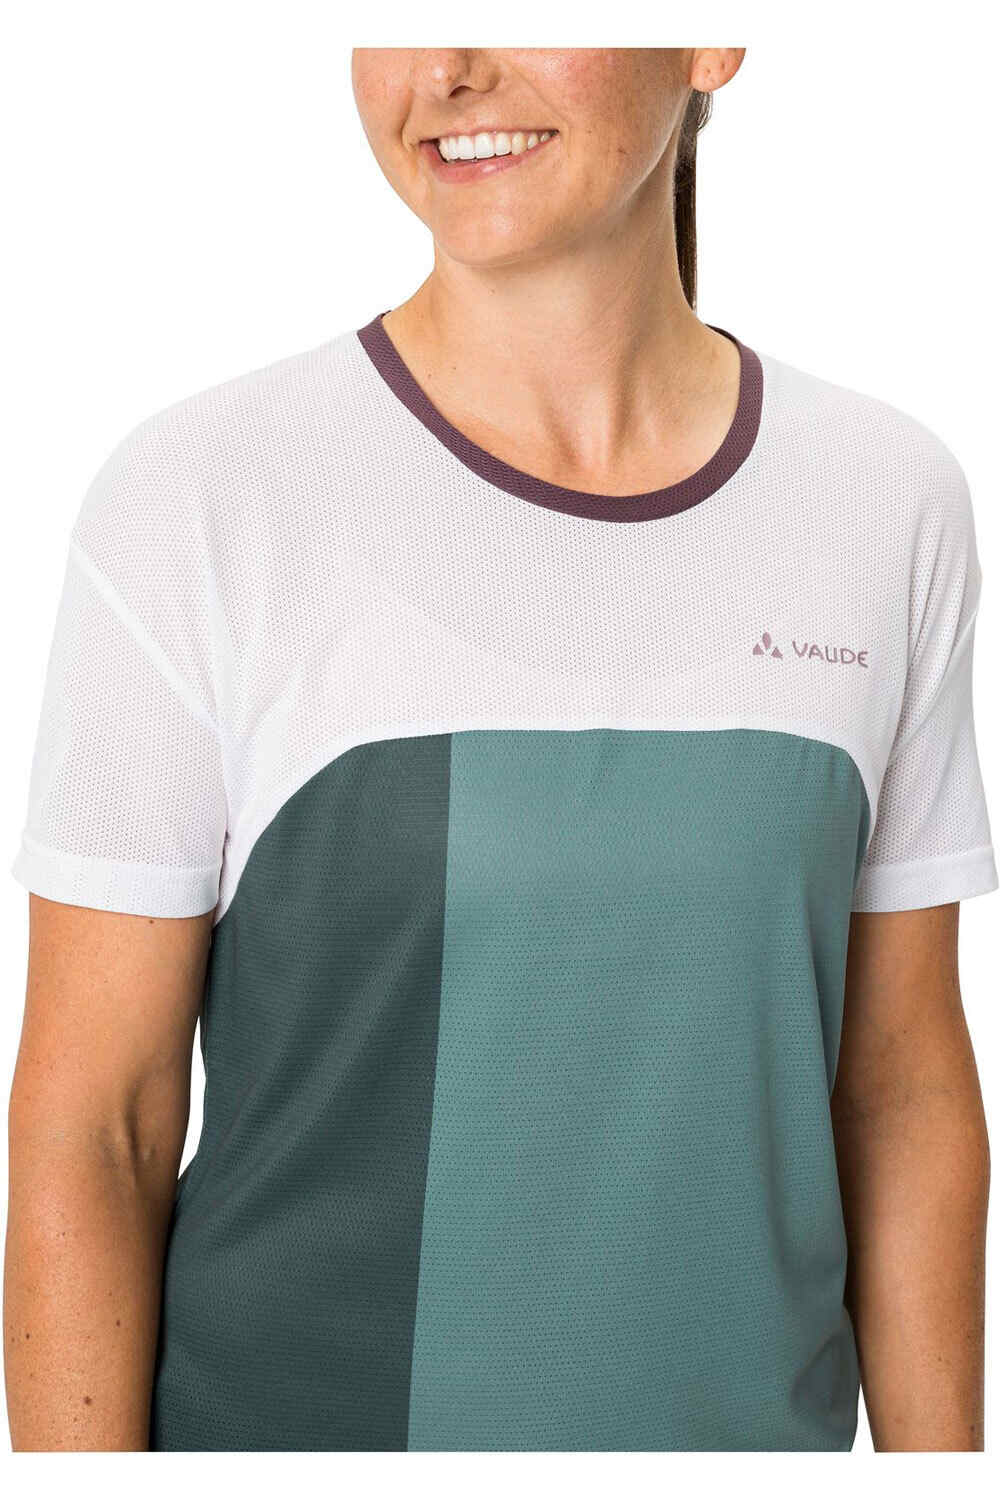 Vaude camiseta ciclismo mujer Women's Moab T-Shirt VI 02